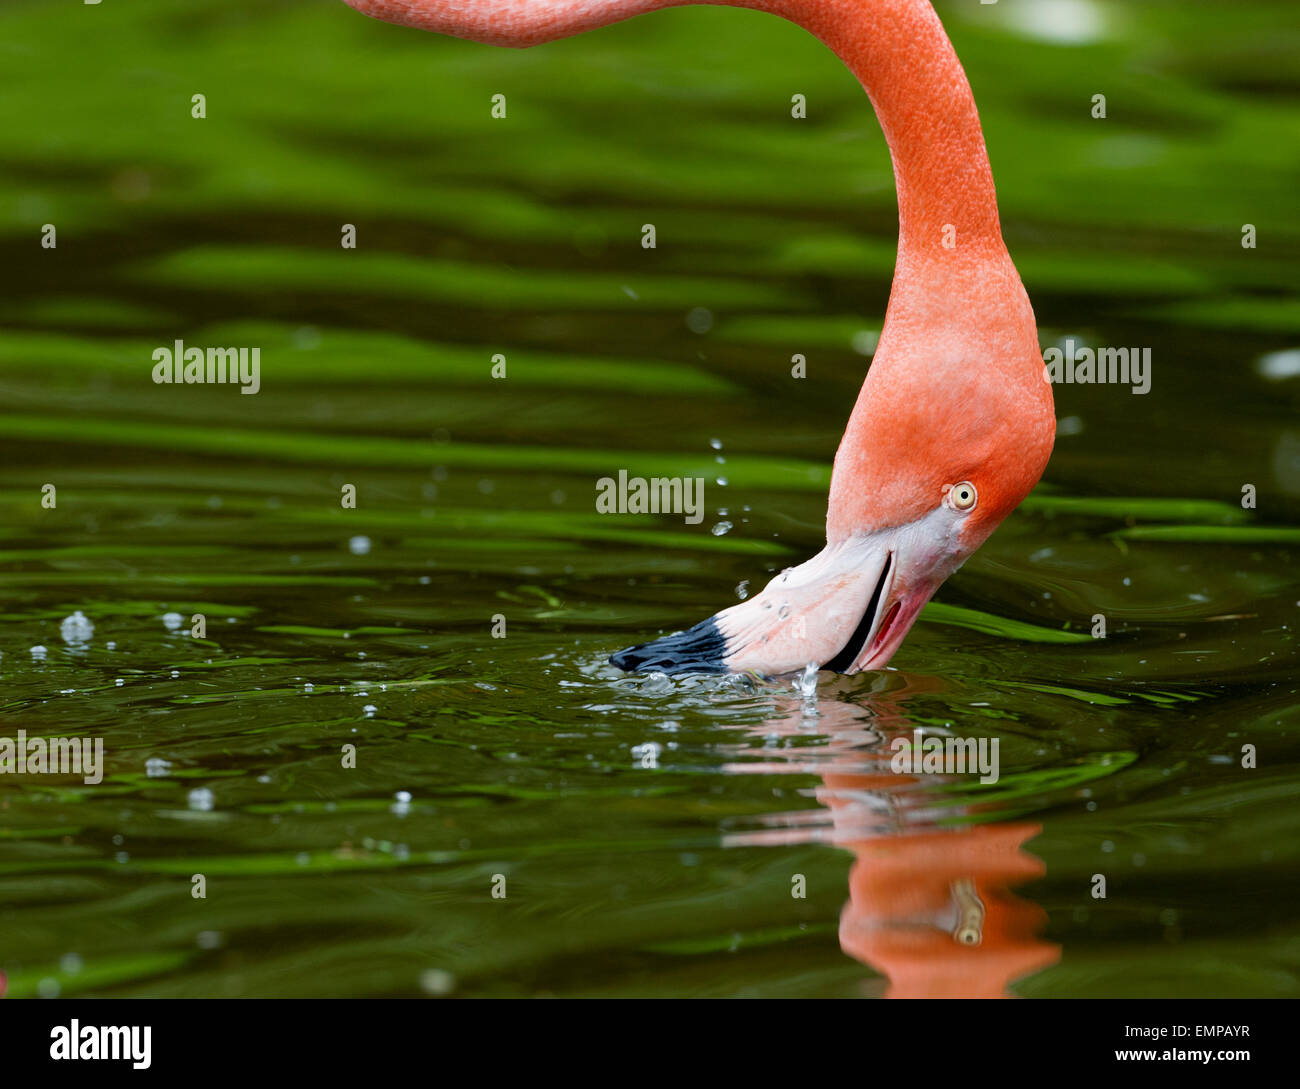 Flamingo showing the filter feeding bill mechanism. Stock Photo